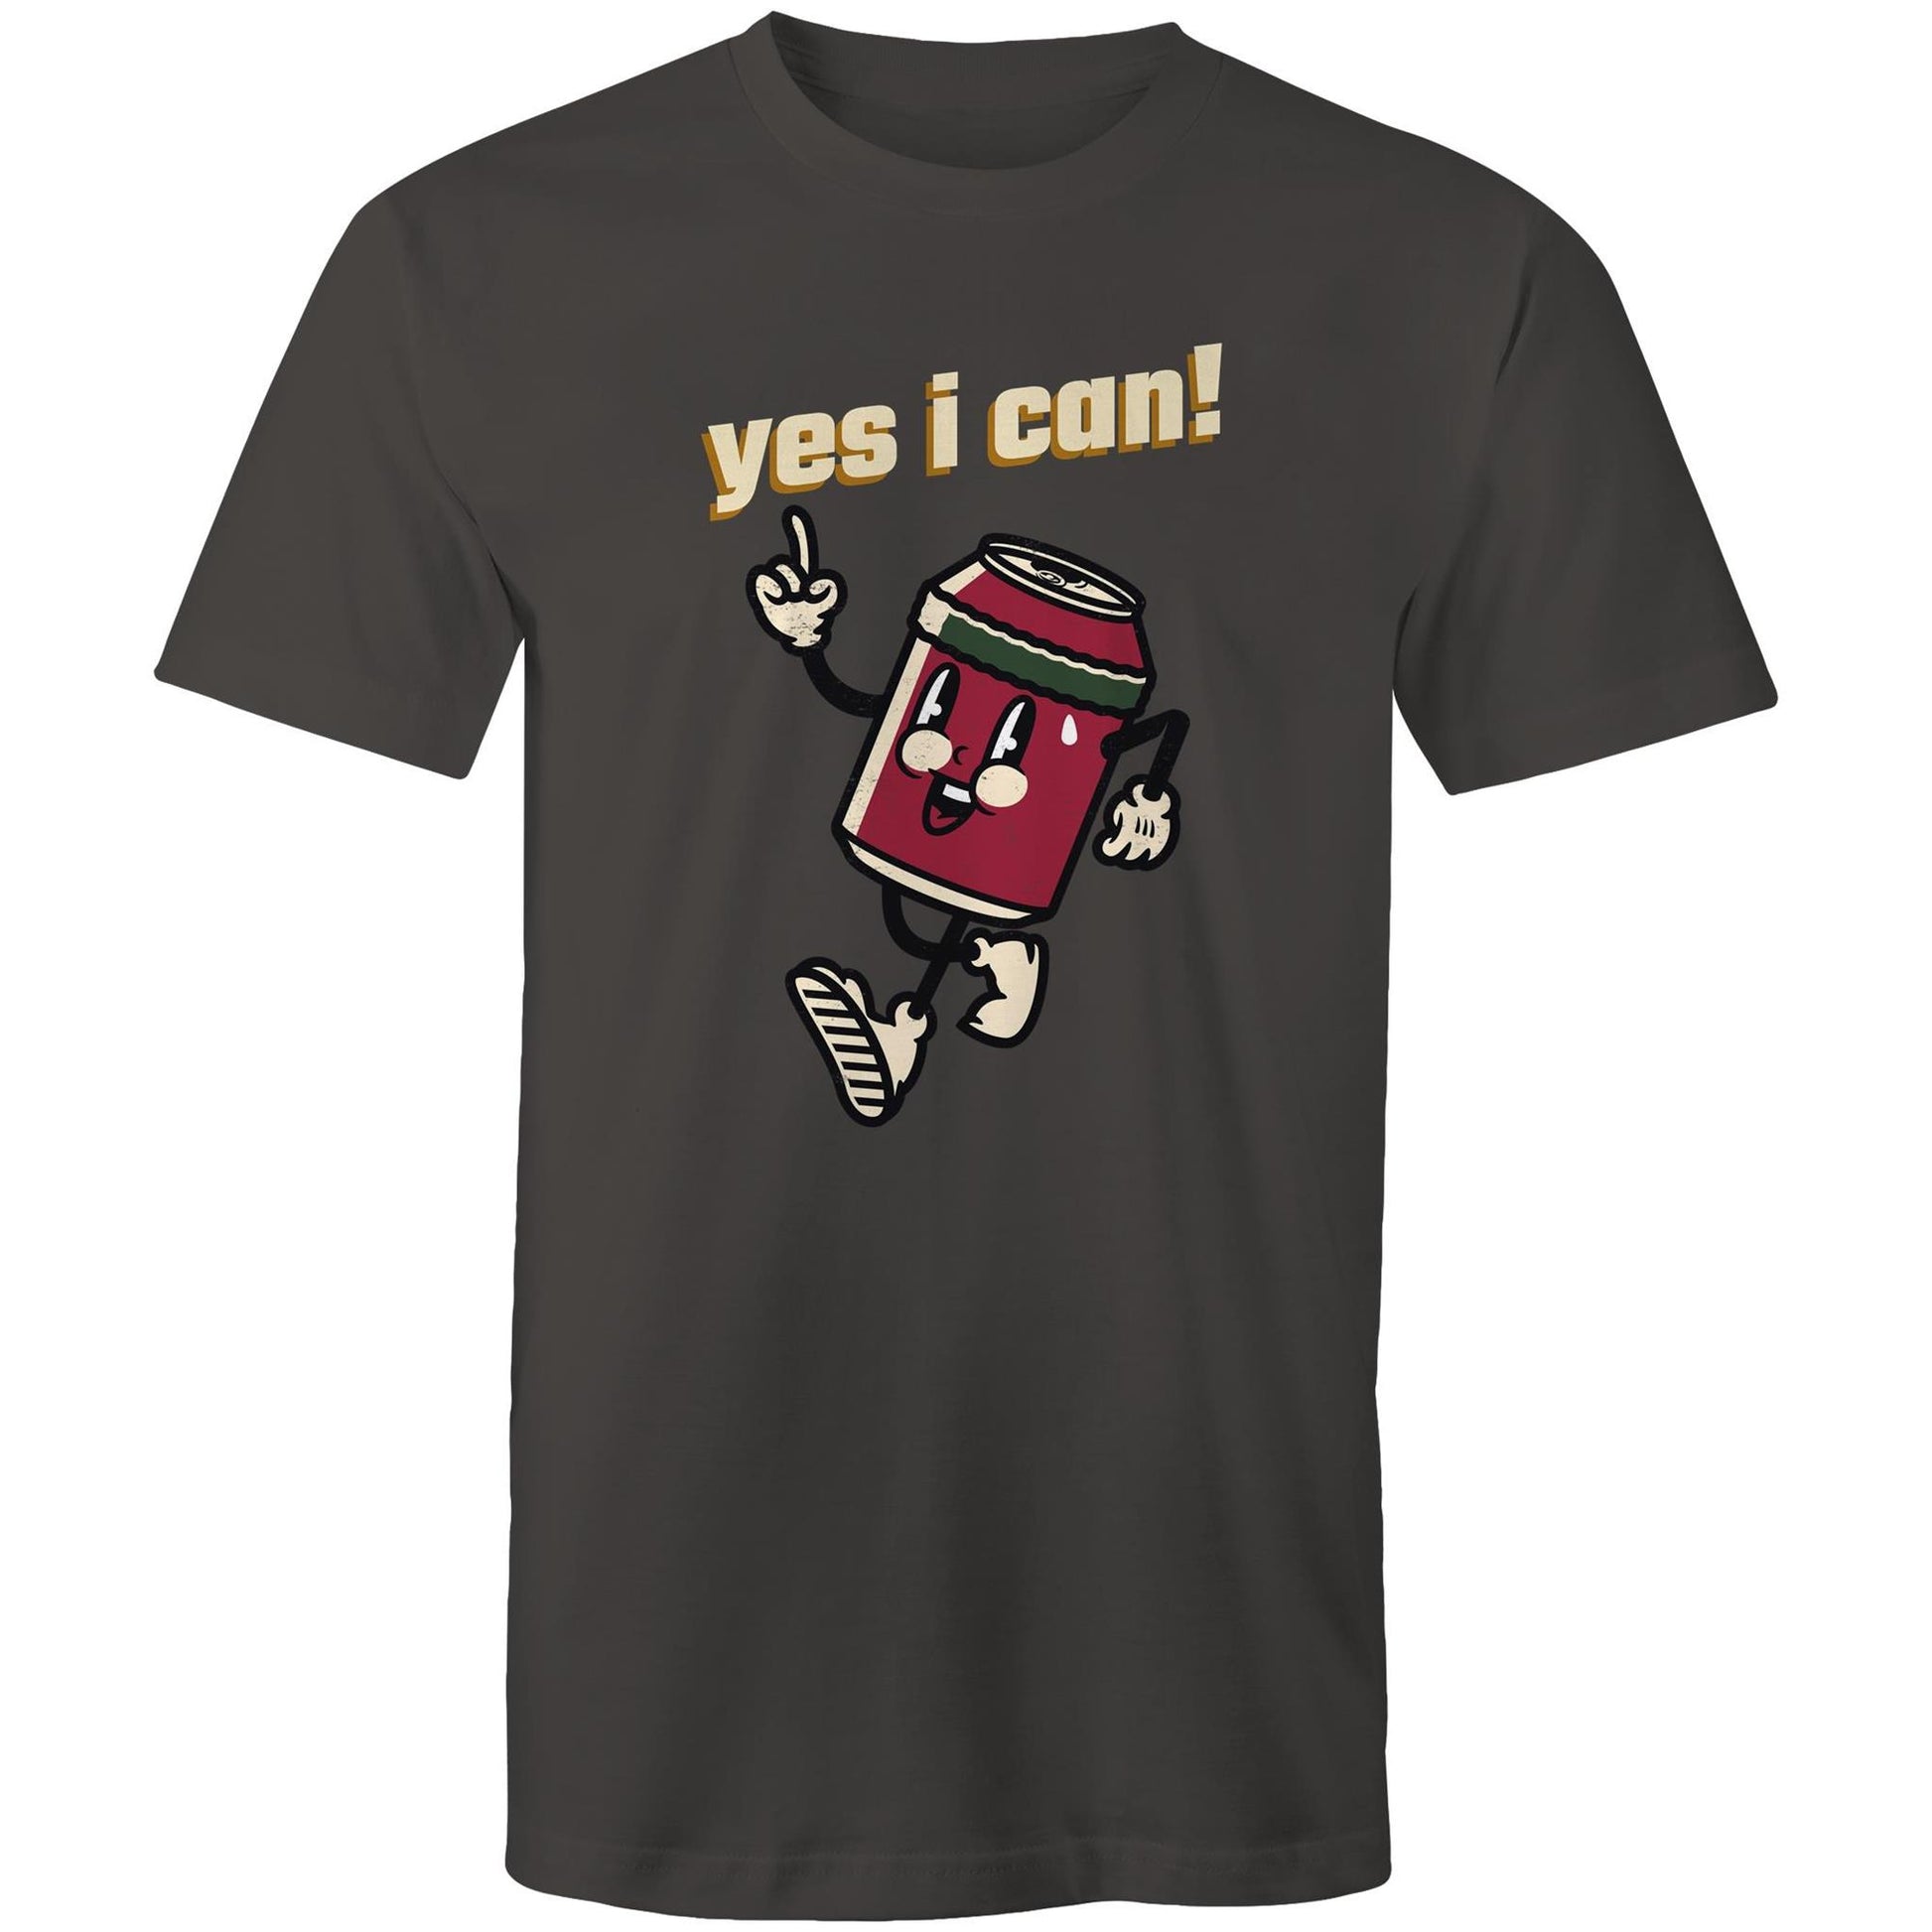 Yes I Can! - Mens T-Shirt Charcoal Mens T-shirt Motivation Retro